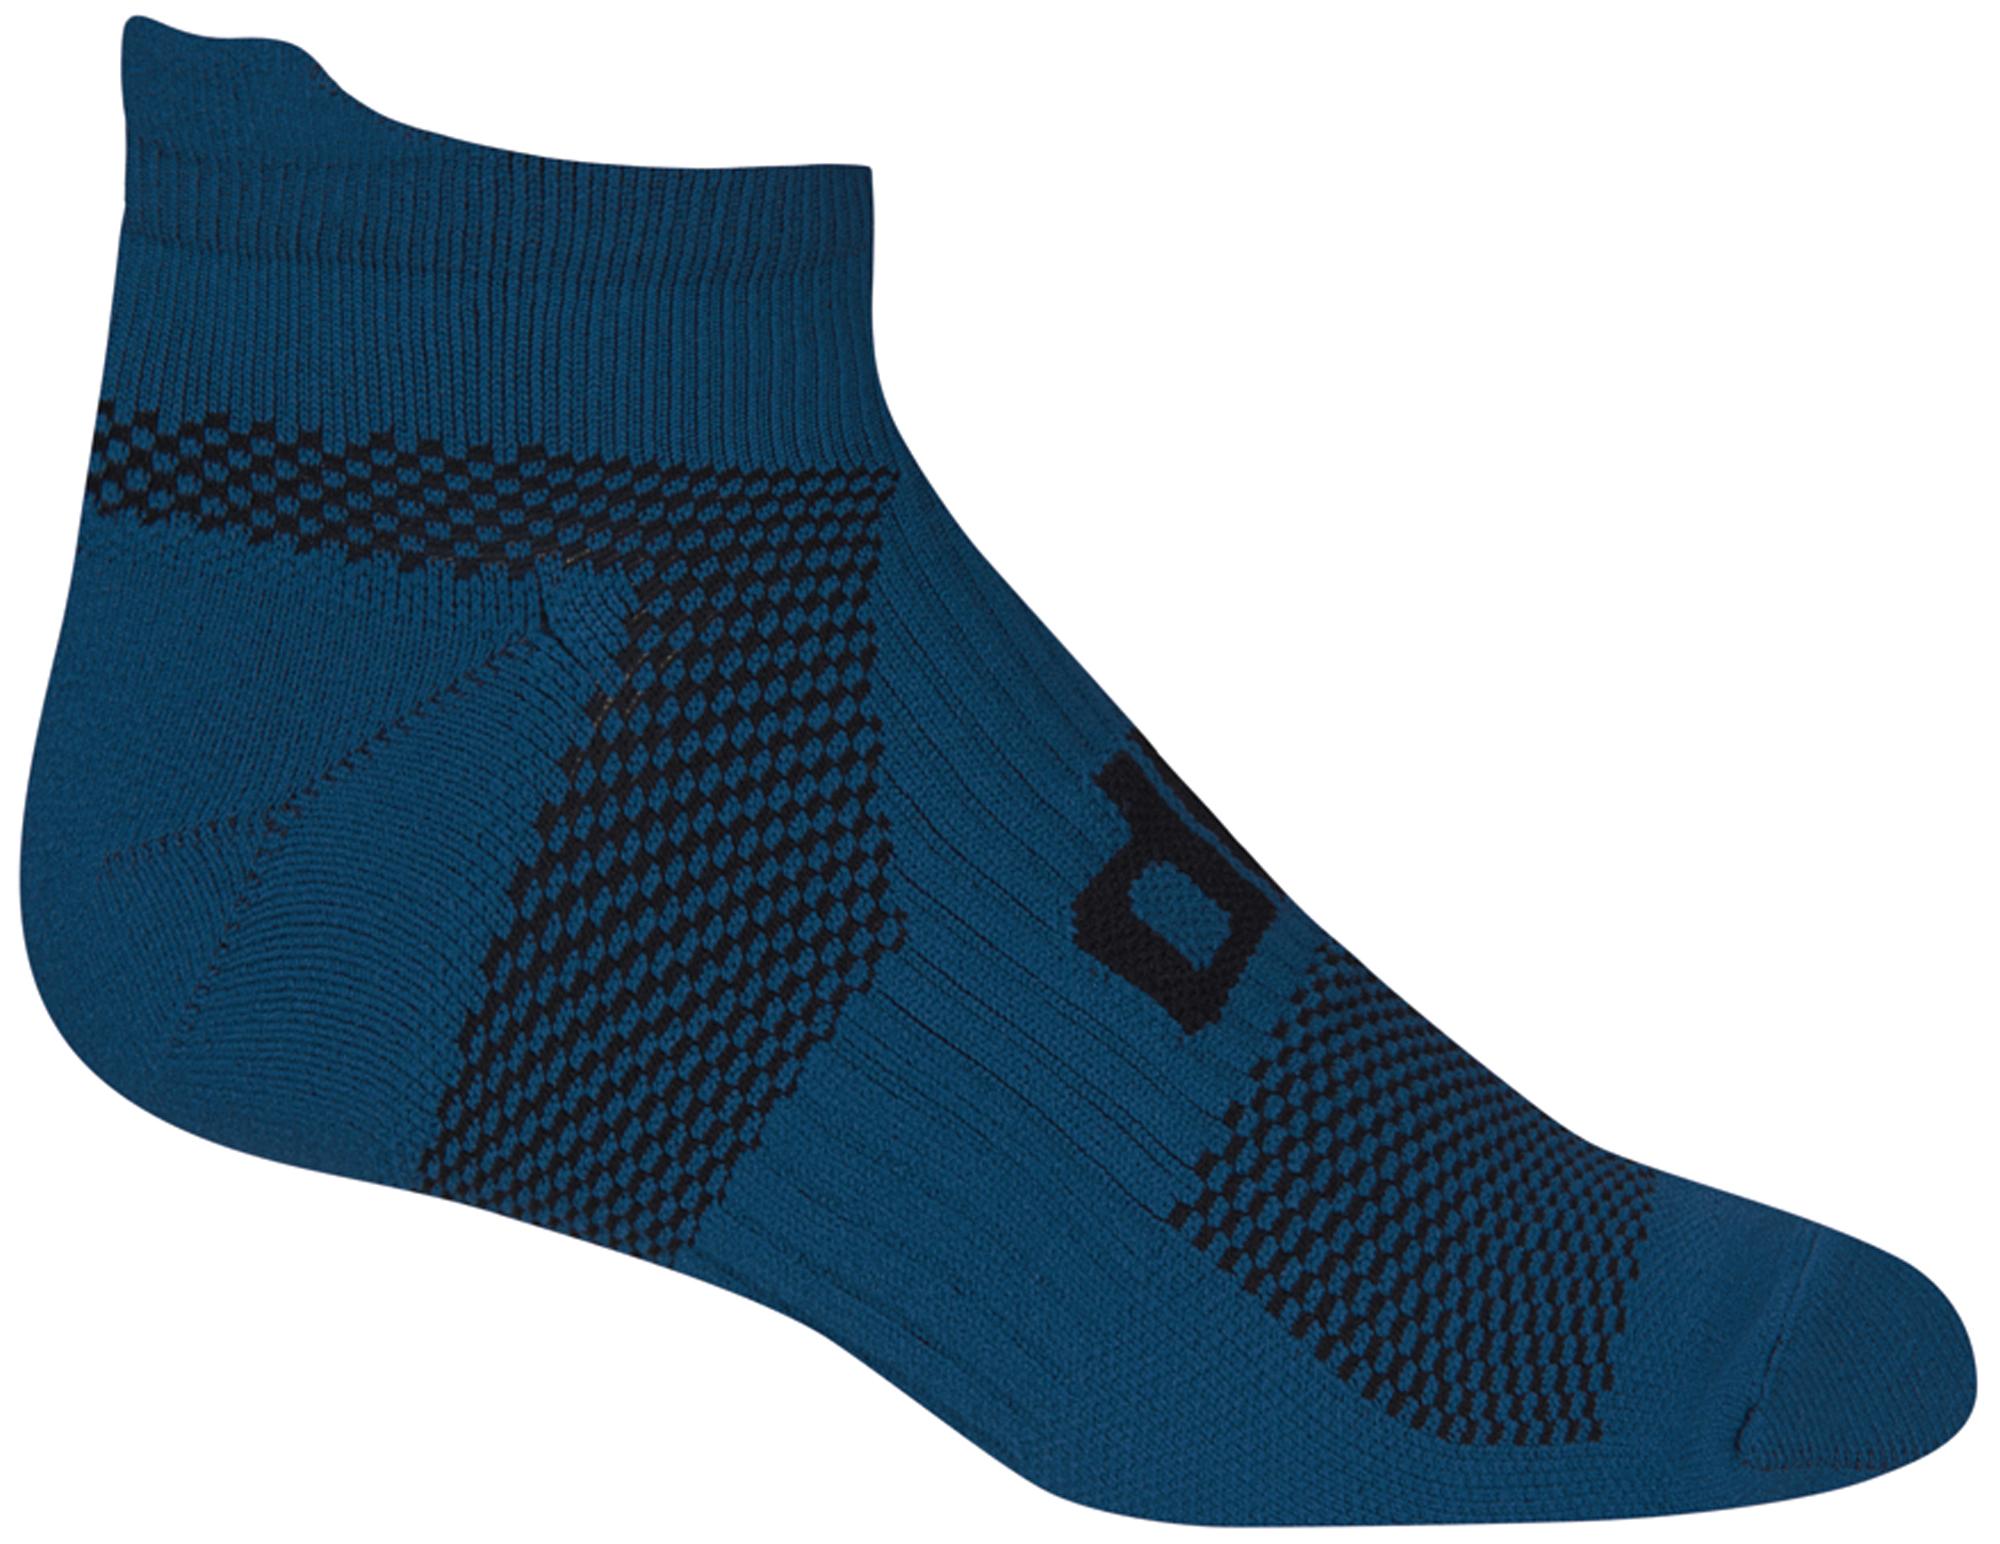 Dhb Low Cut Running Sock - Blue